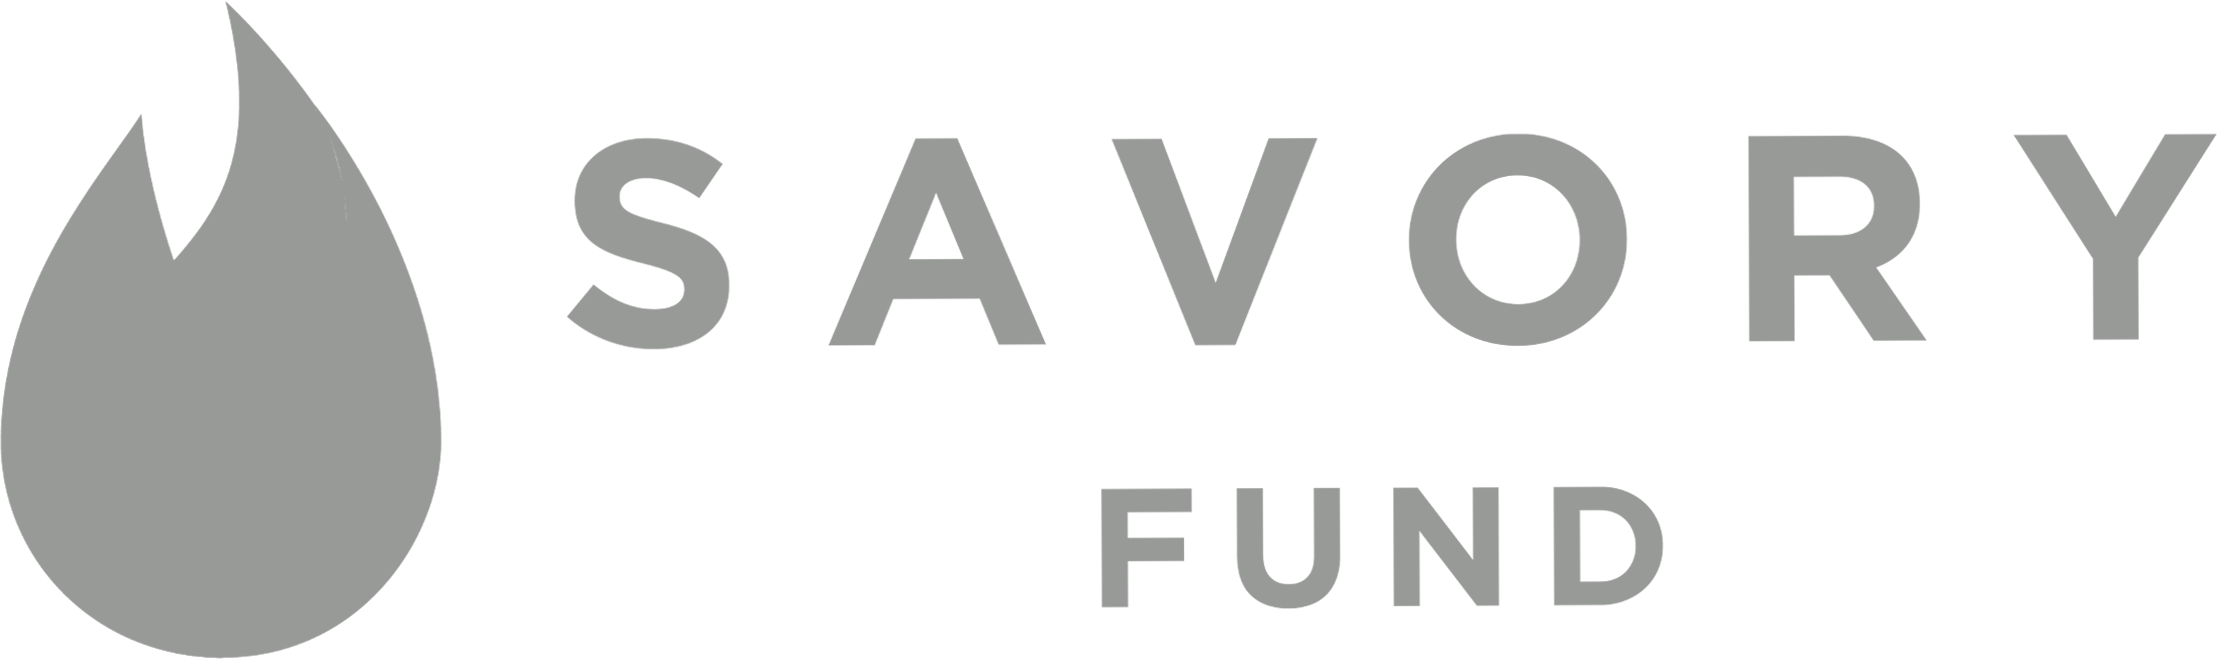 Savory Fund Logo